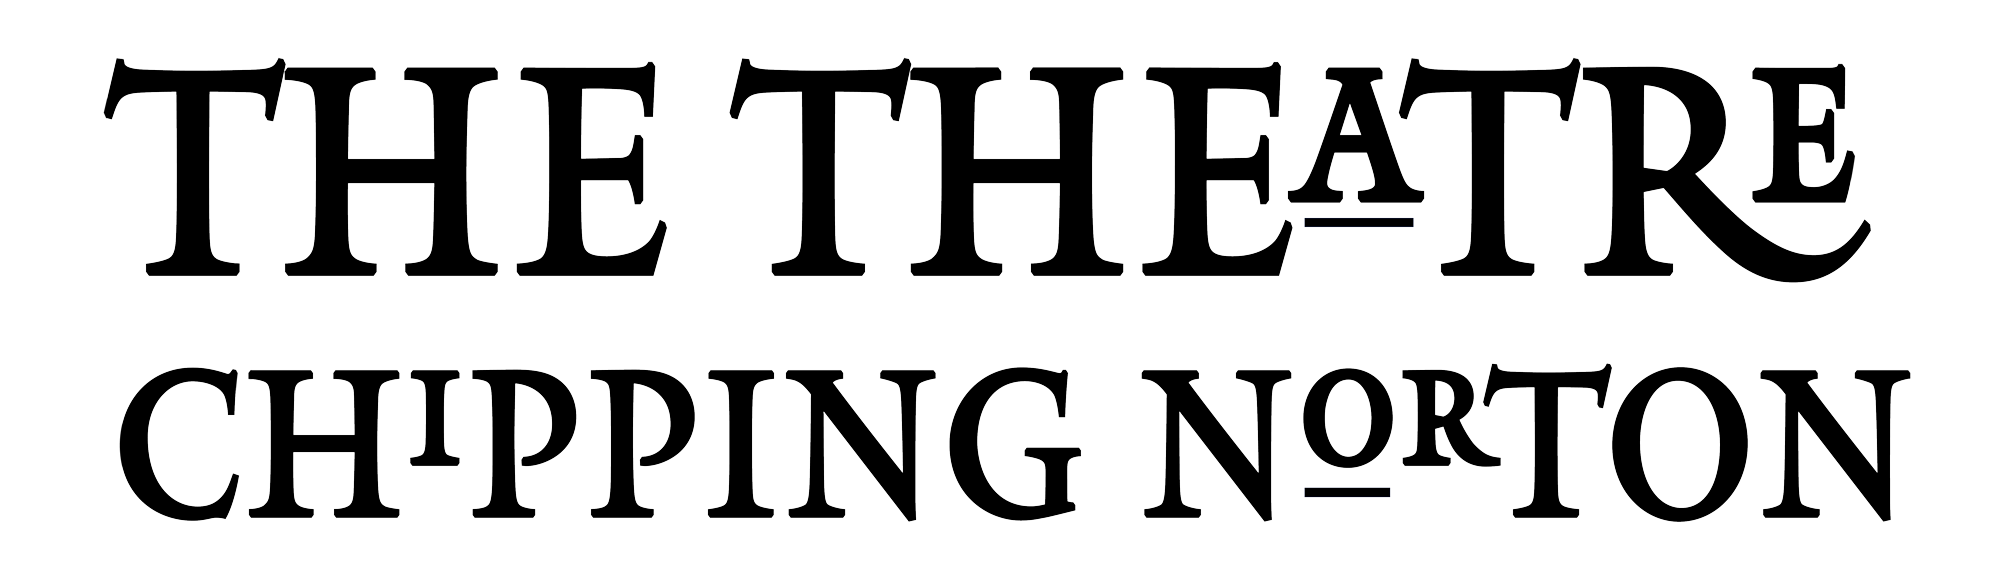 The Theatre Chipping Norton logo